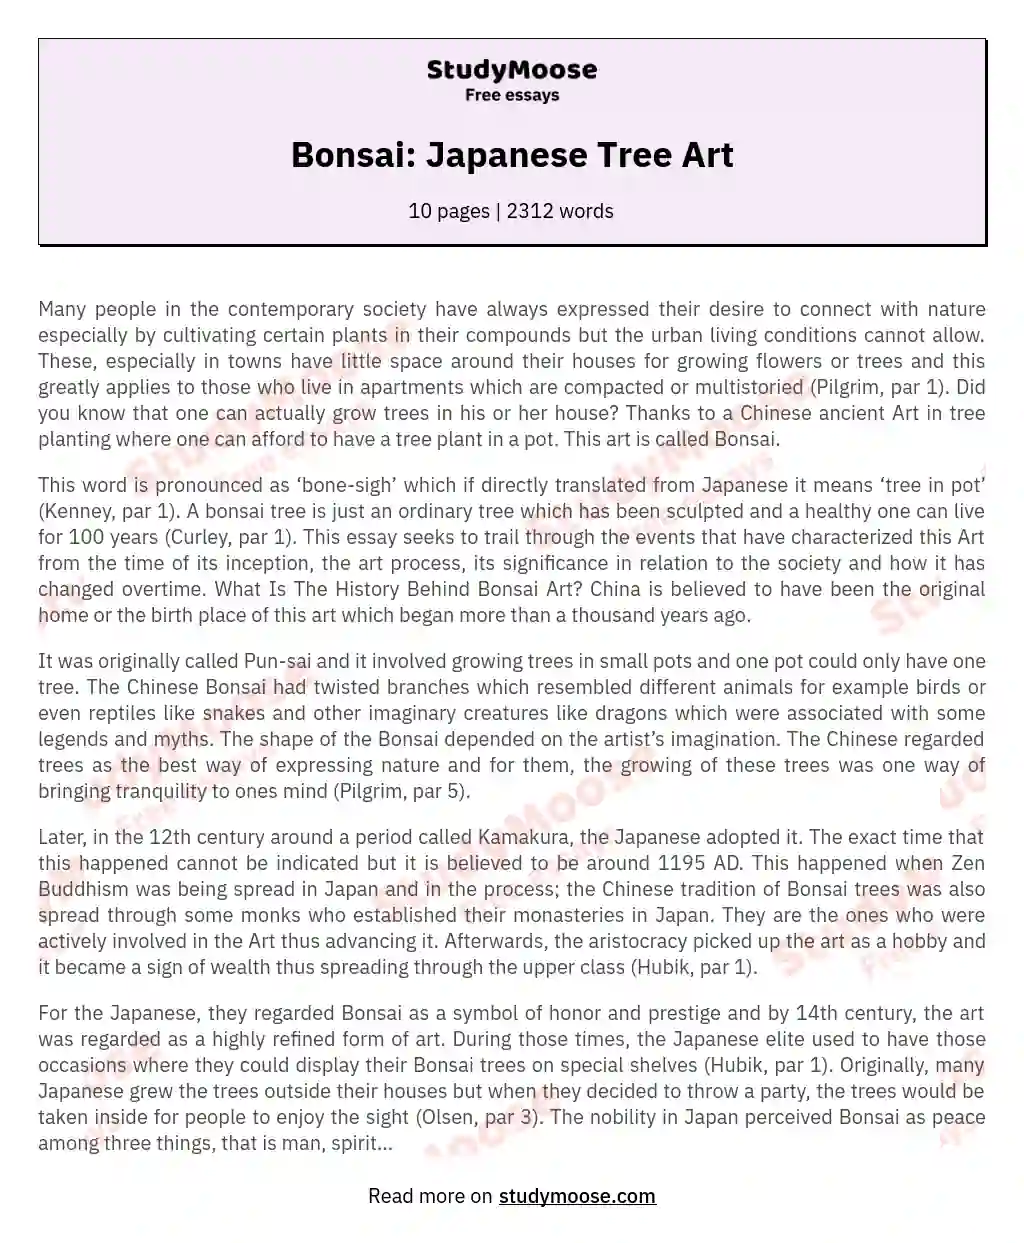 Bonsai: Japanese Tree Art essay